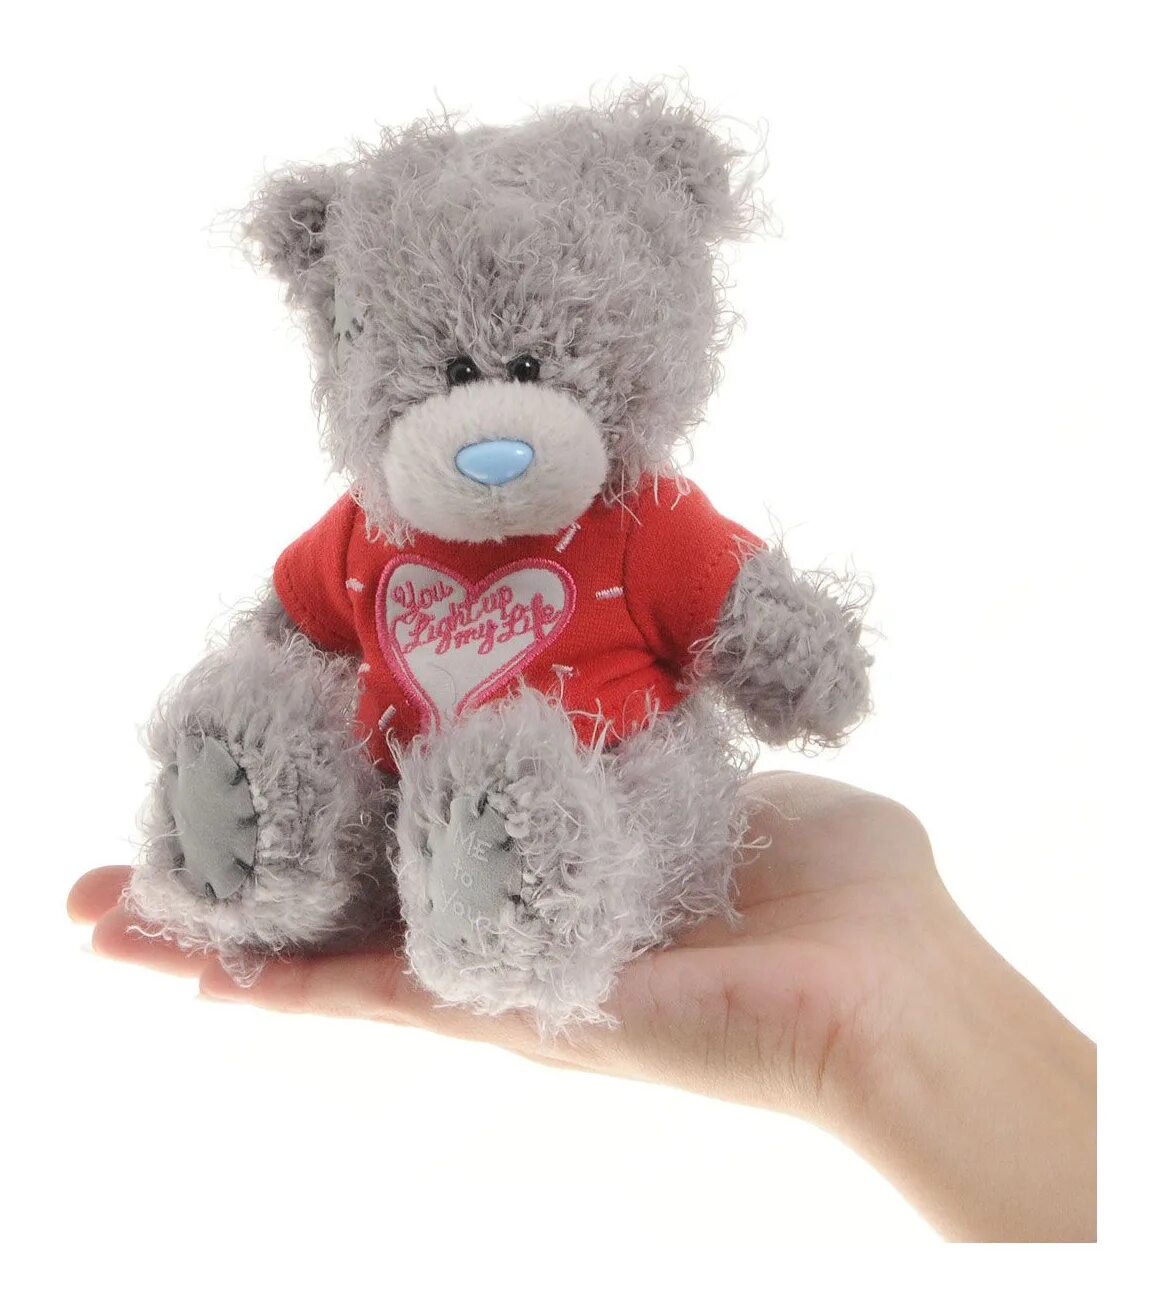 Мишка Тедди me to you. Мишка Тедди игрушка мягкая. Мягкие игрушки медведи Тедди. Медведь Тедди игрушка.